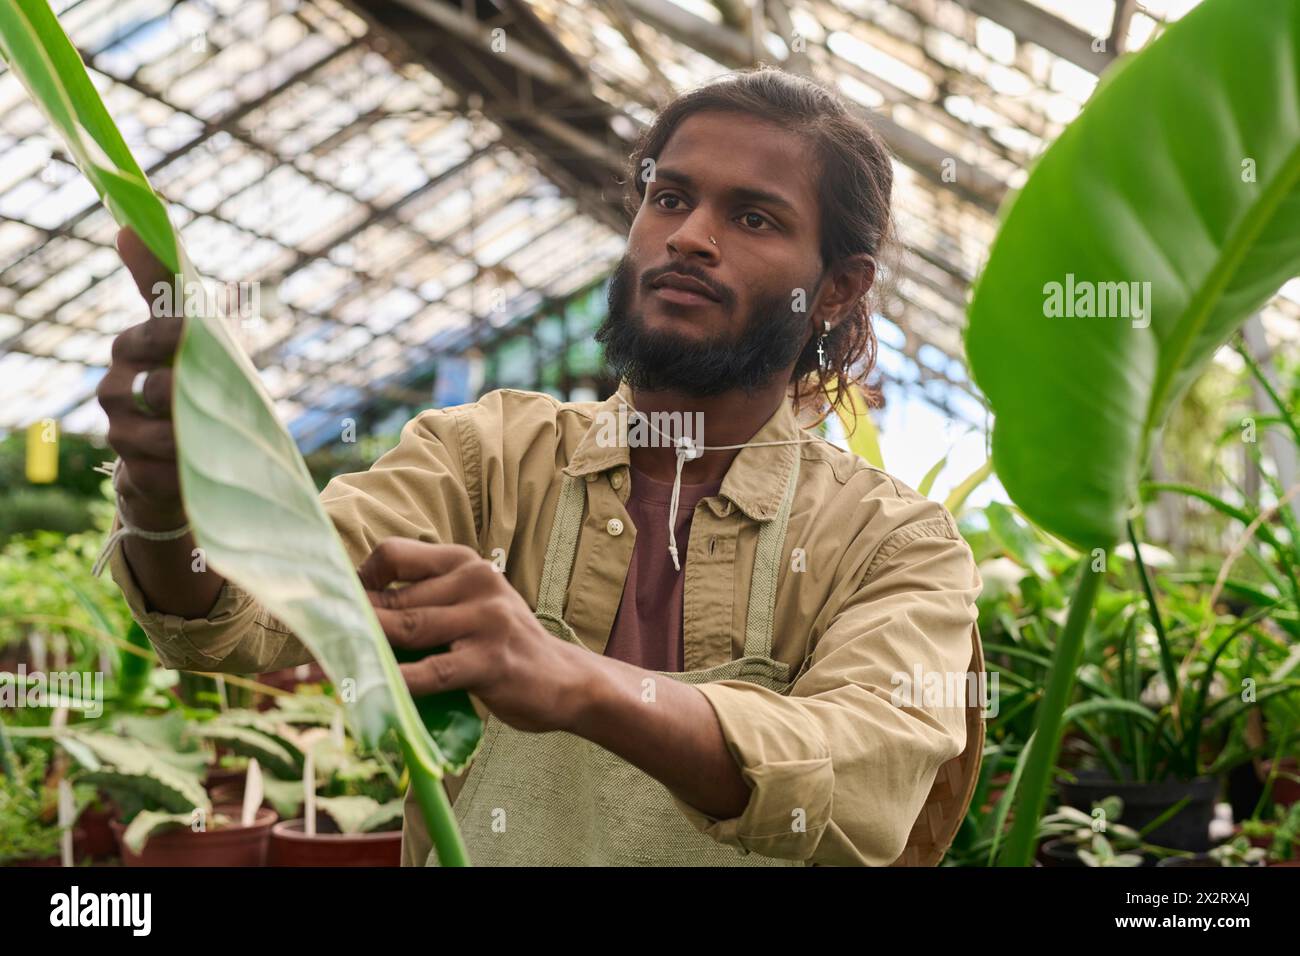 Serious farmer examining banana leaves in greenhouse Stock Photo